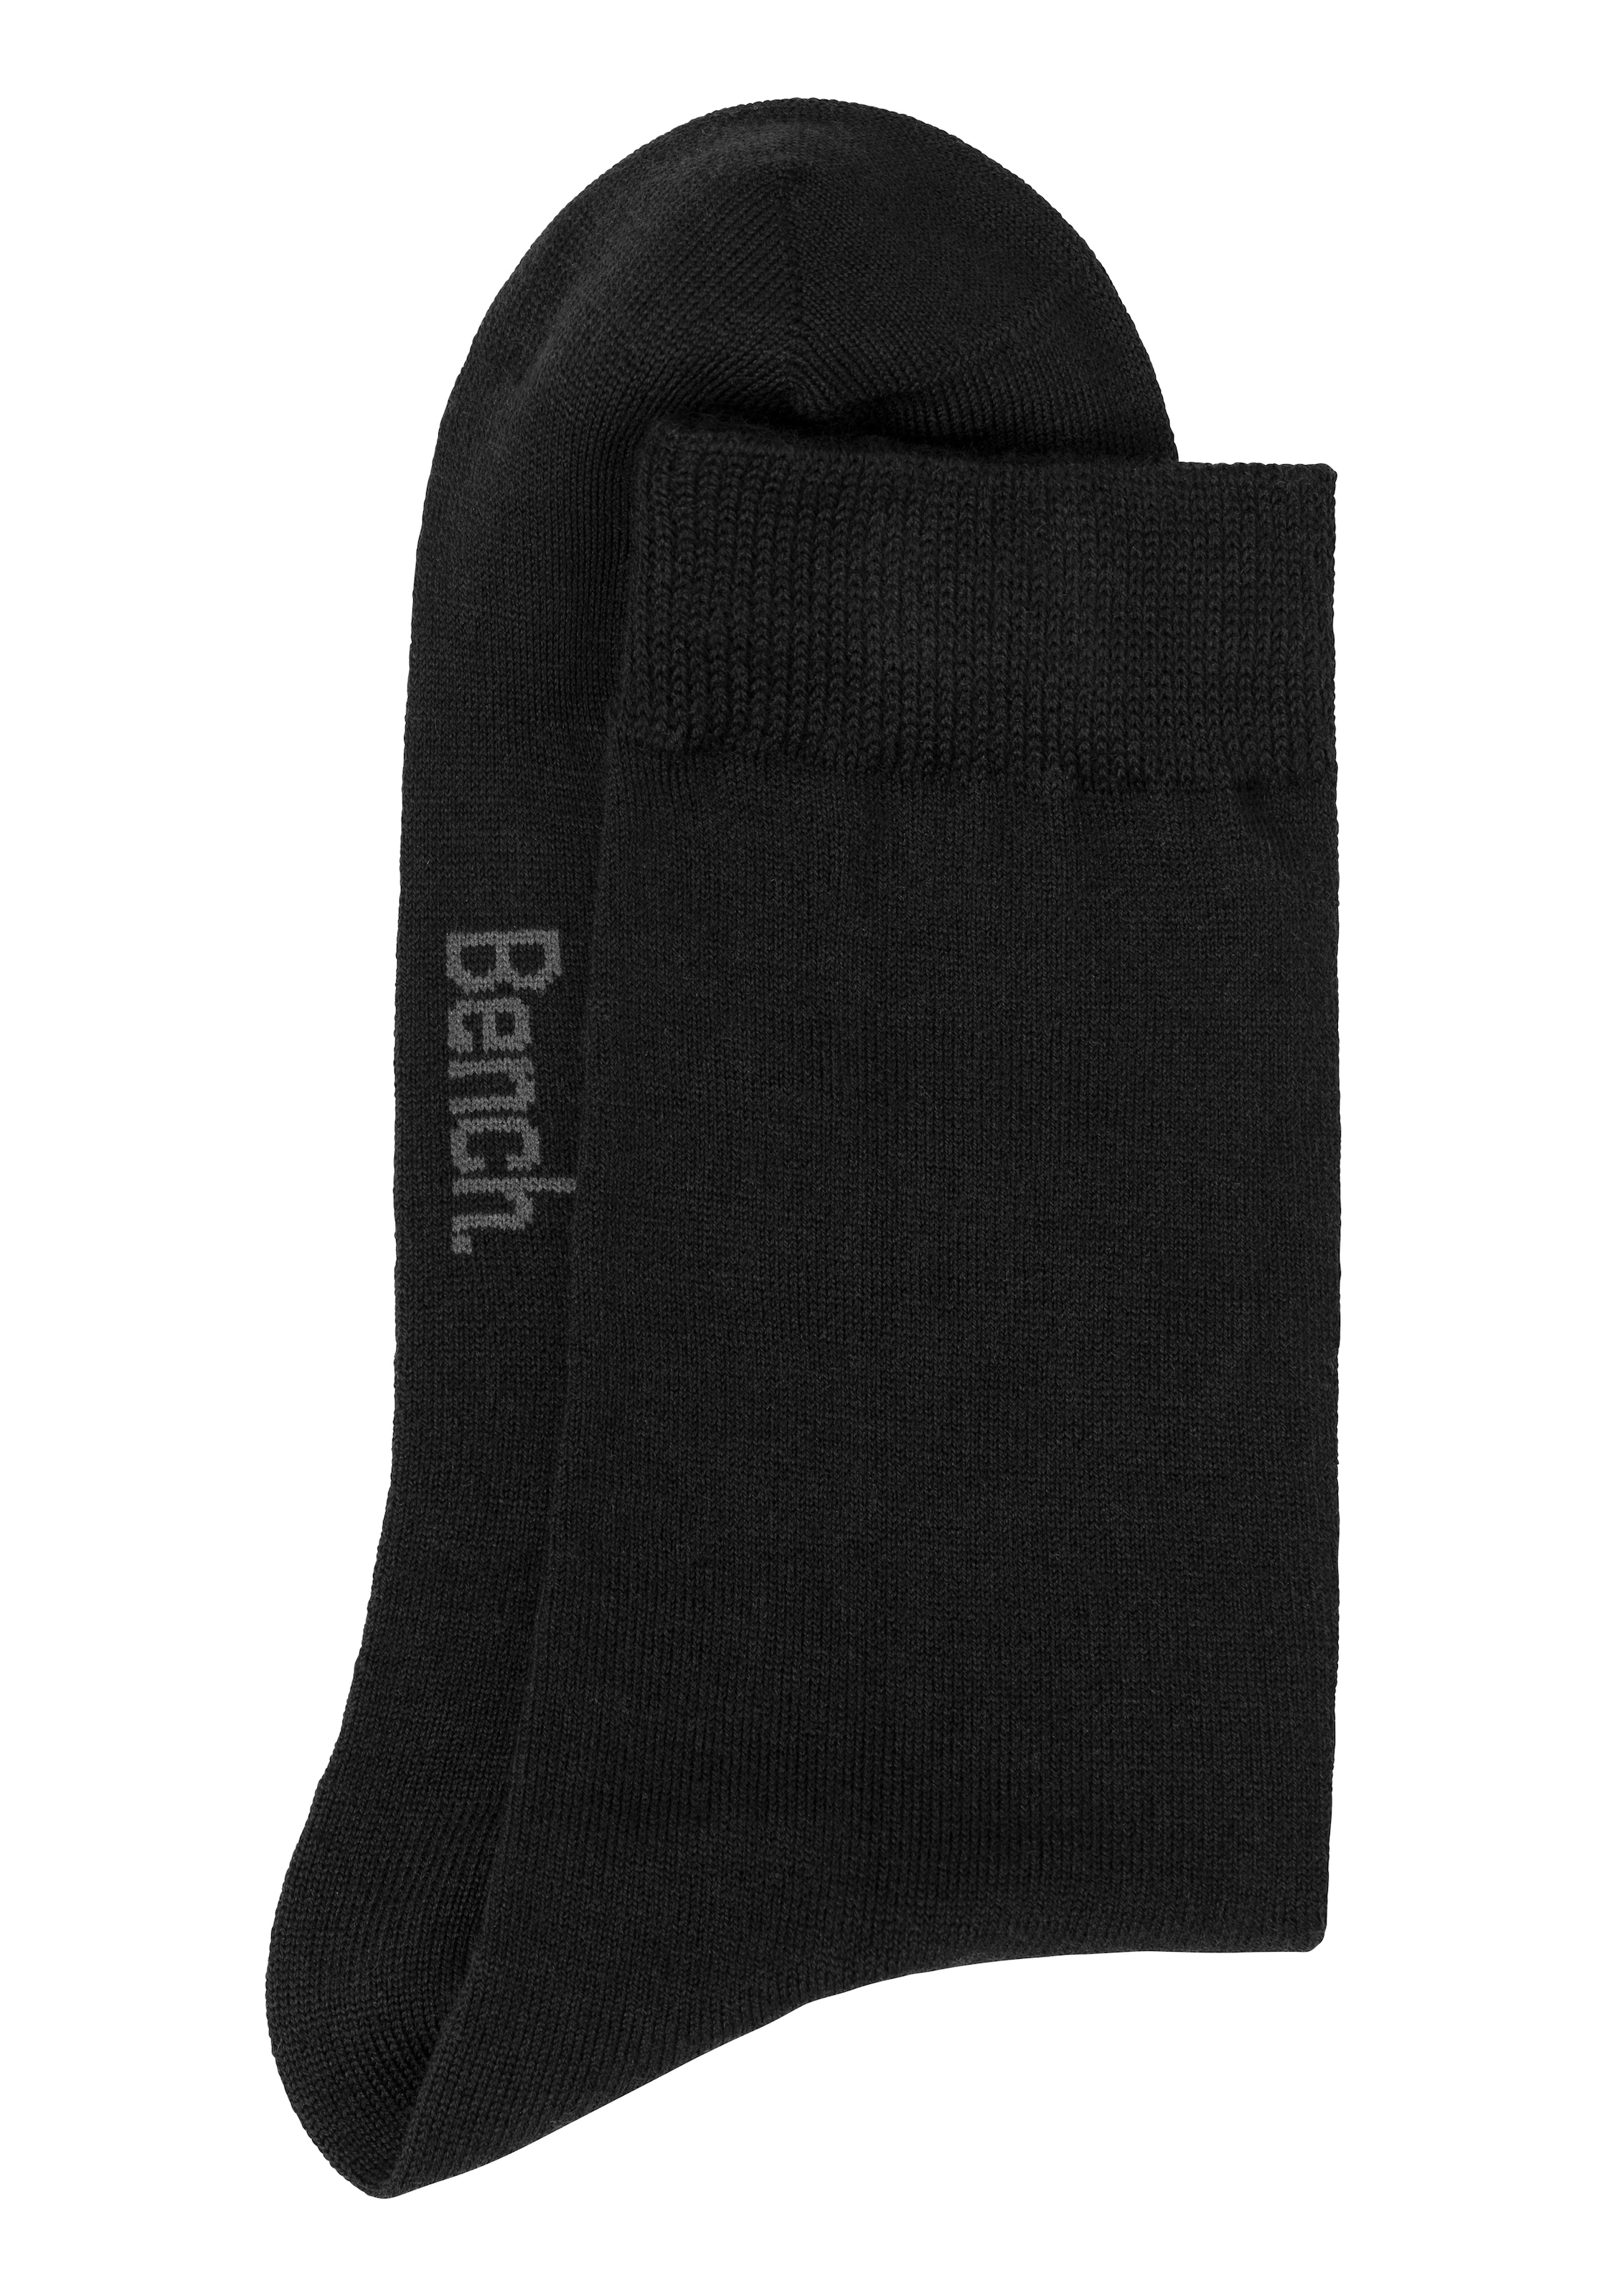 Bench. Socken, (3 Paar), Wollsocken aus flauschigem Material online kaufen  | BAUR